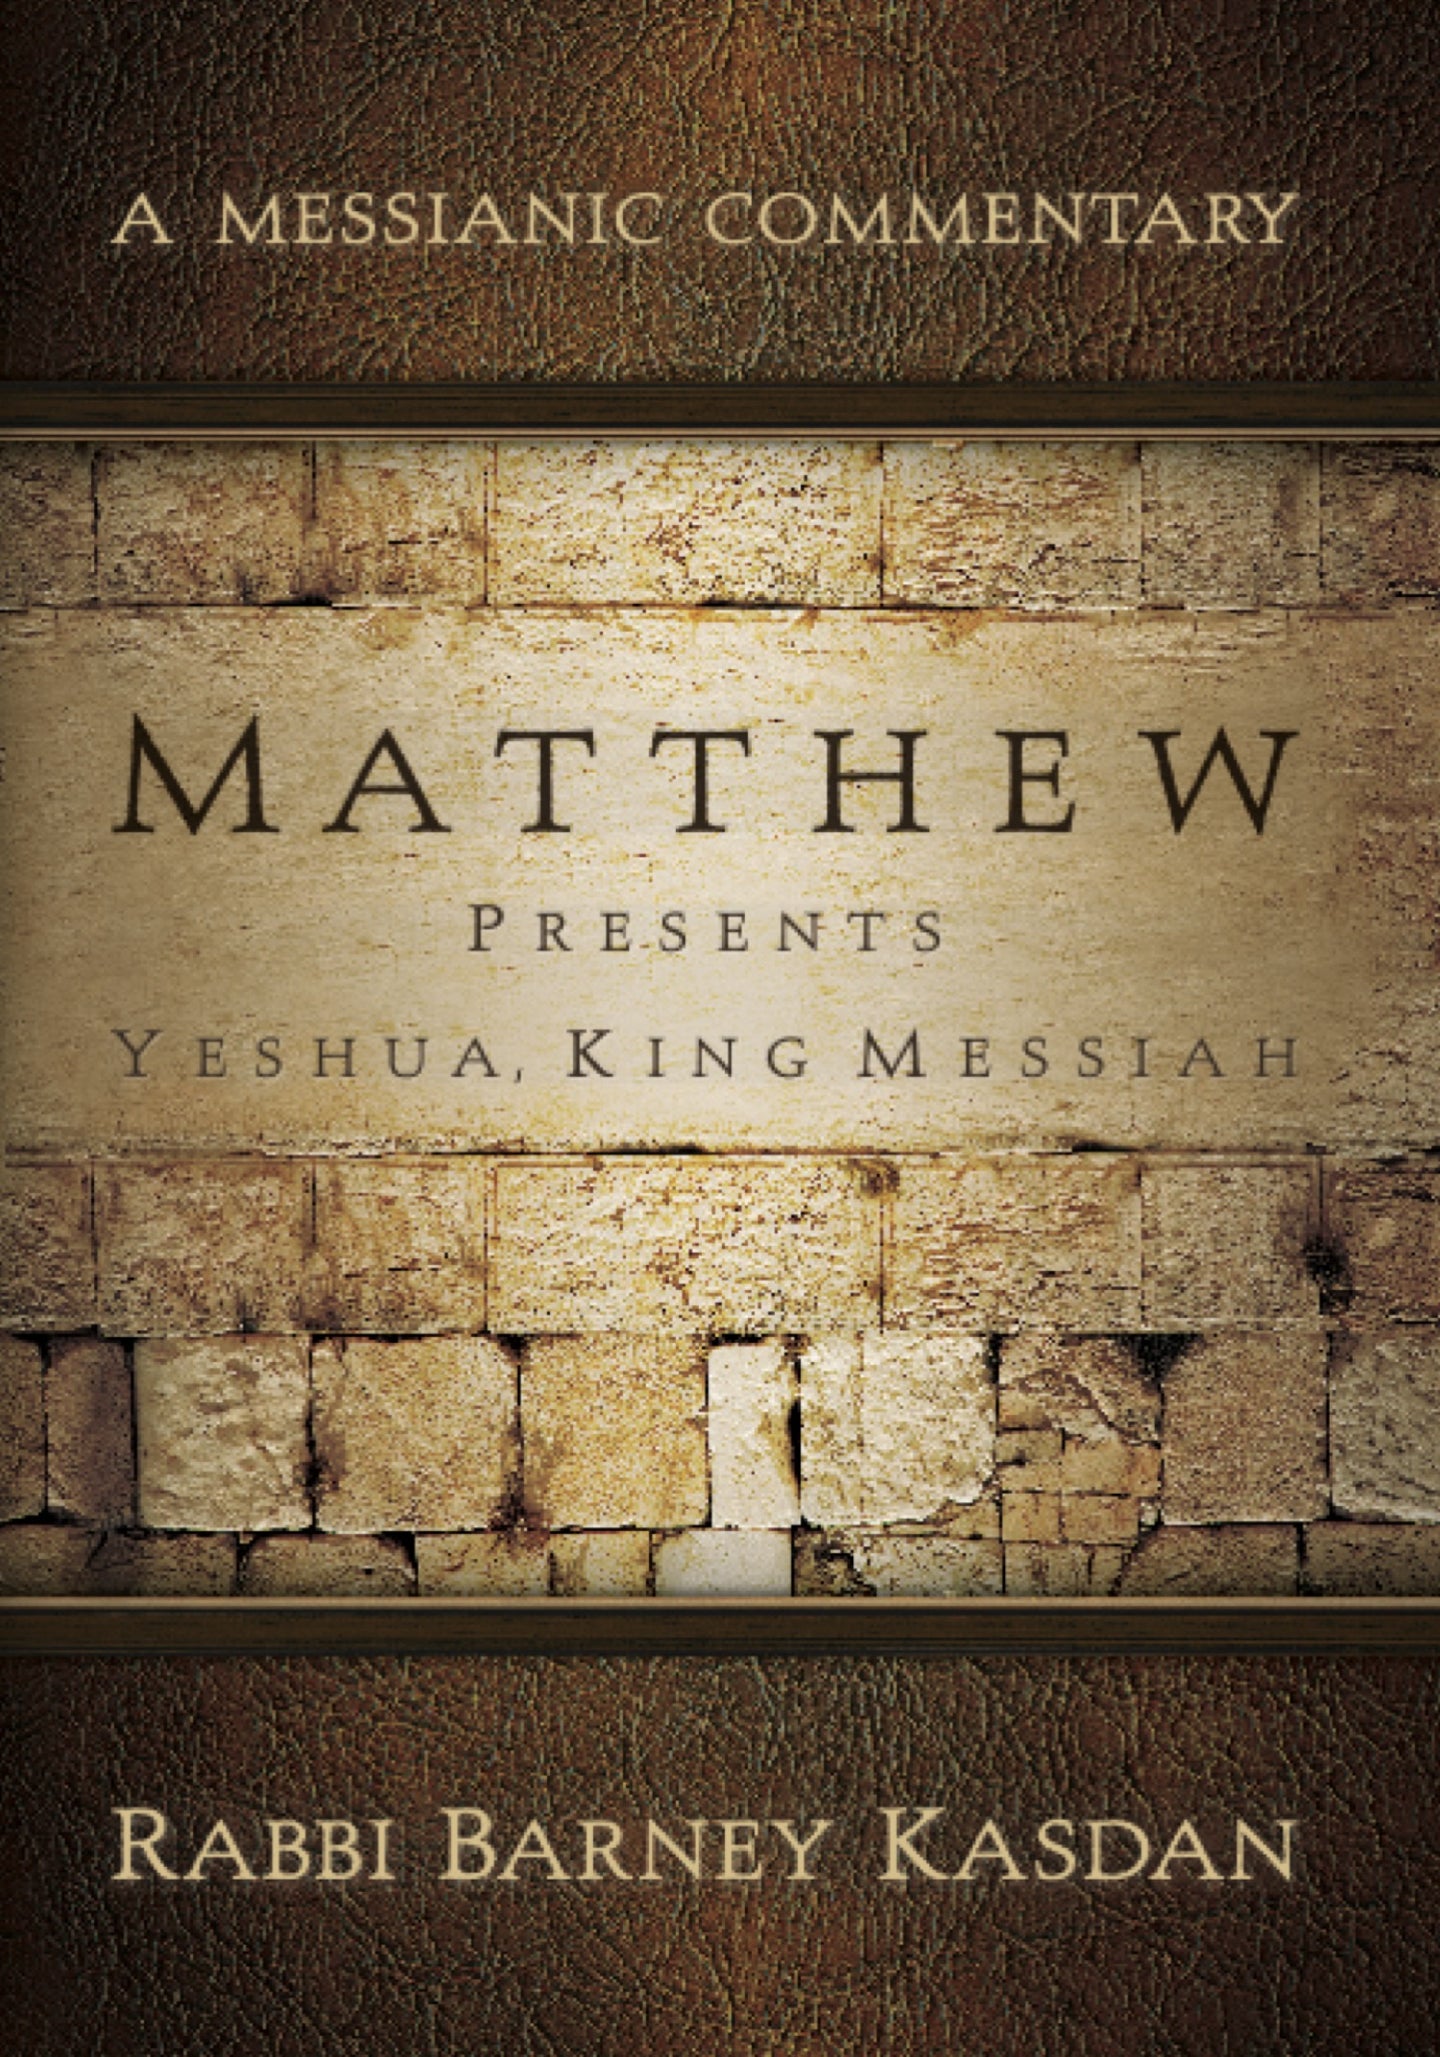 A Messianic Commentary - Matthew Presents Yeshua, King Messiah by Rabbi Barney Kasdan